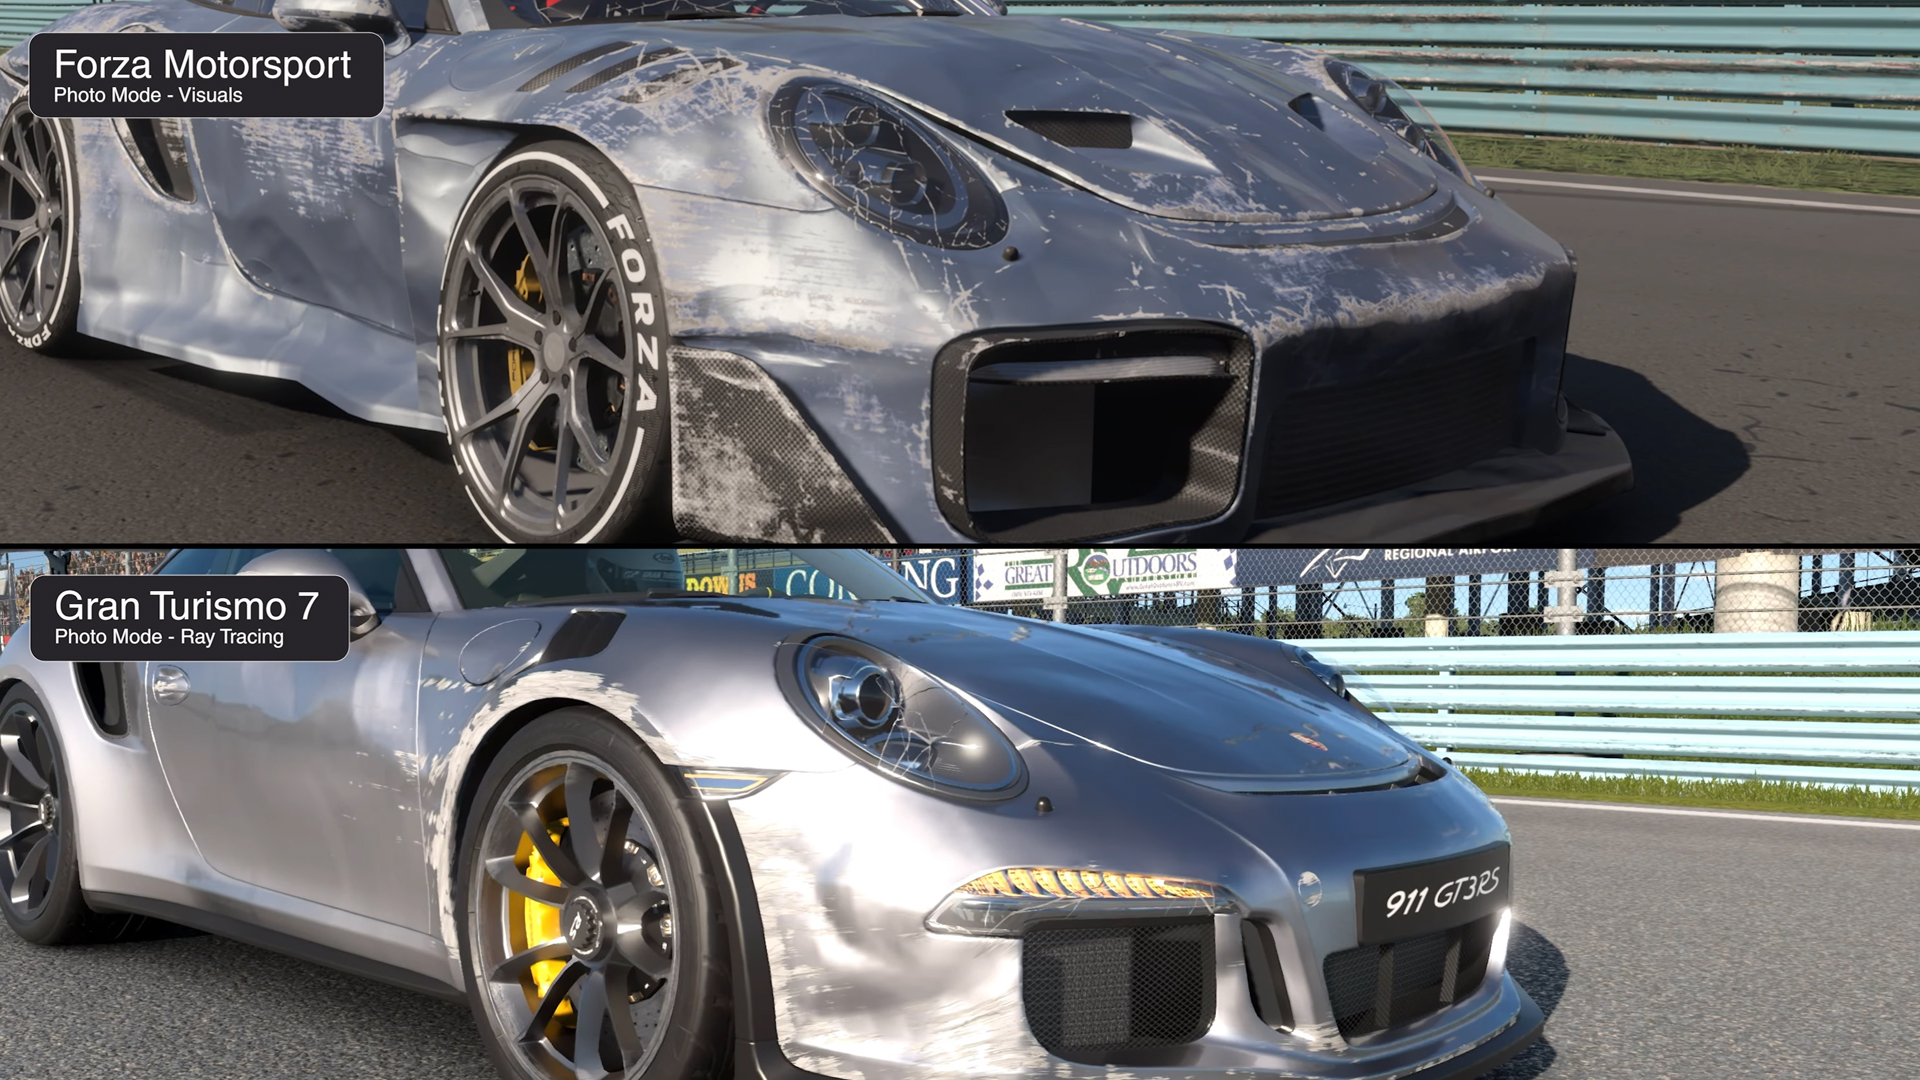 Gran Turismo 7 vs. Forza Motorsport, Which One Looks Best? - autoevolution